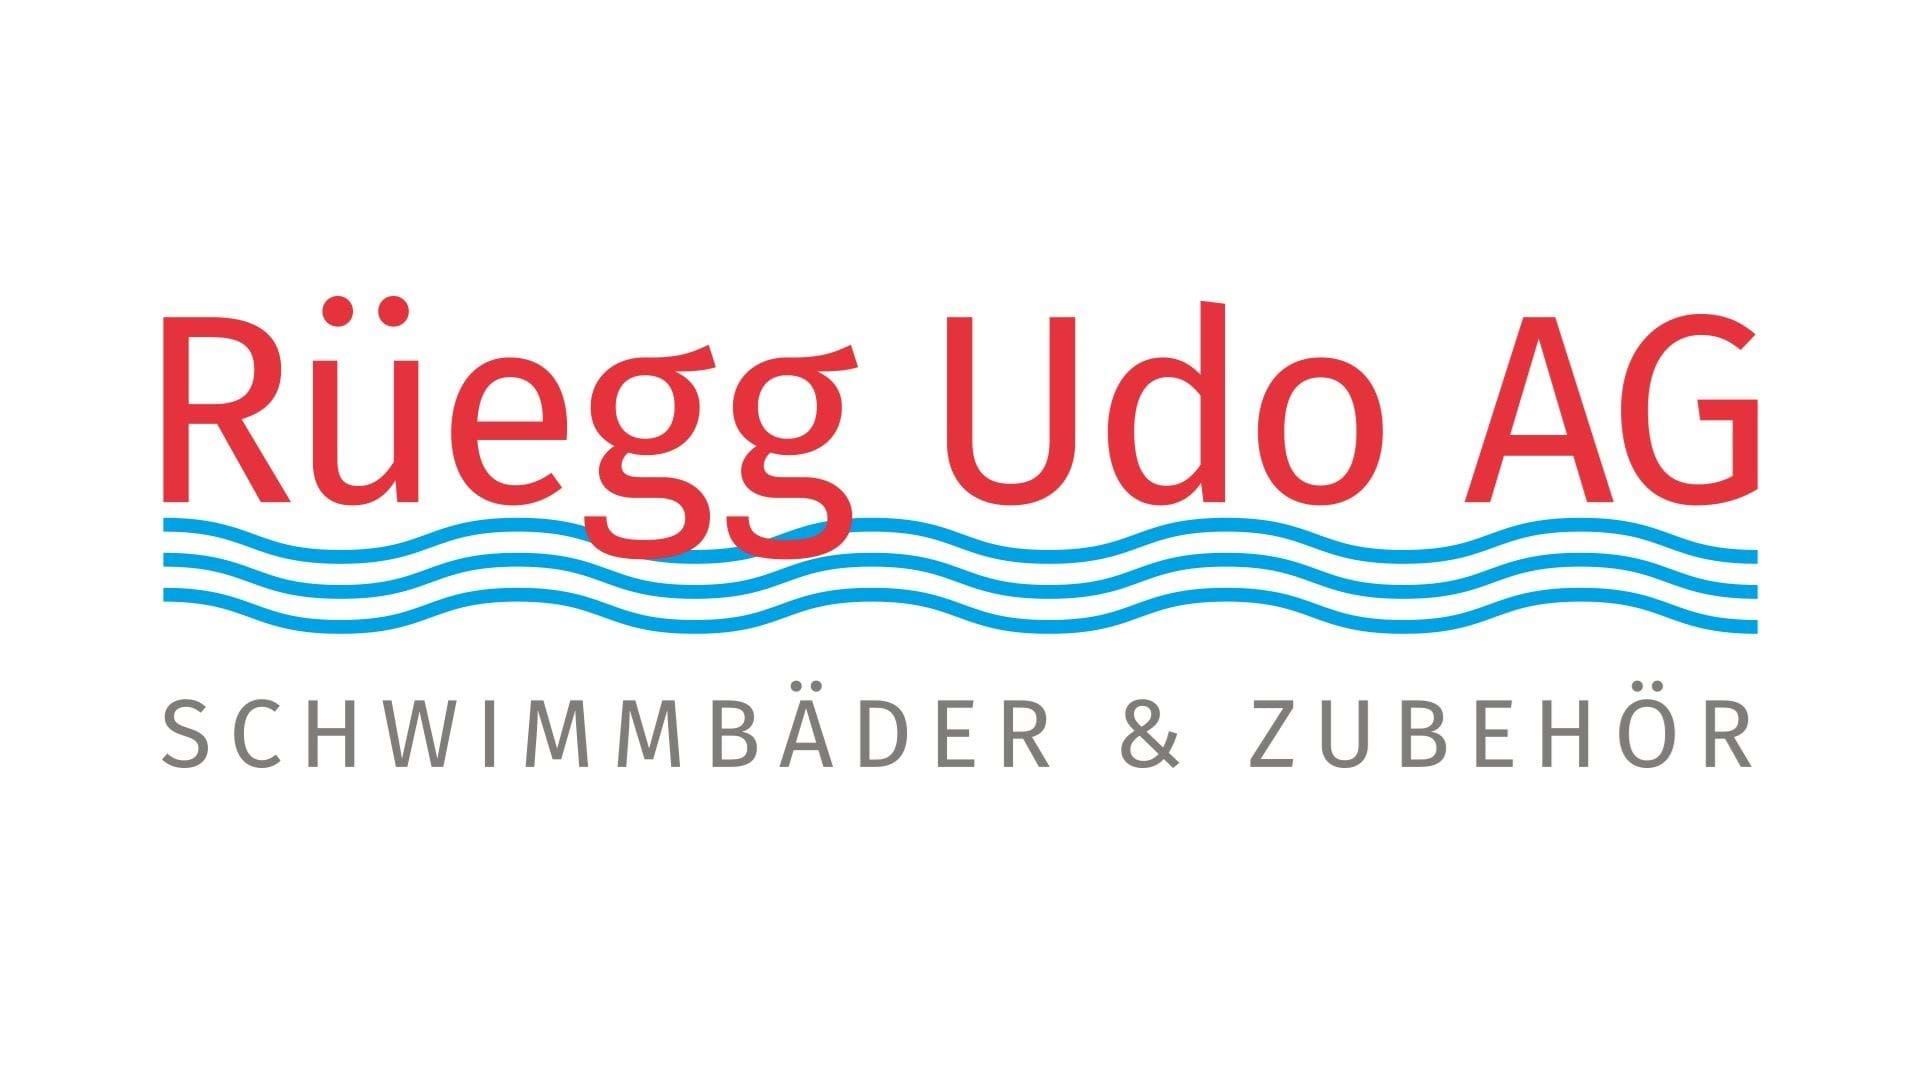 Rüegg Udo AG